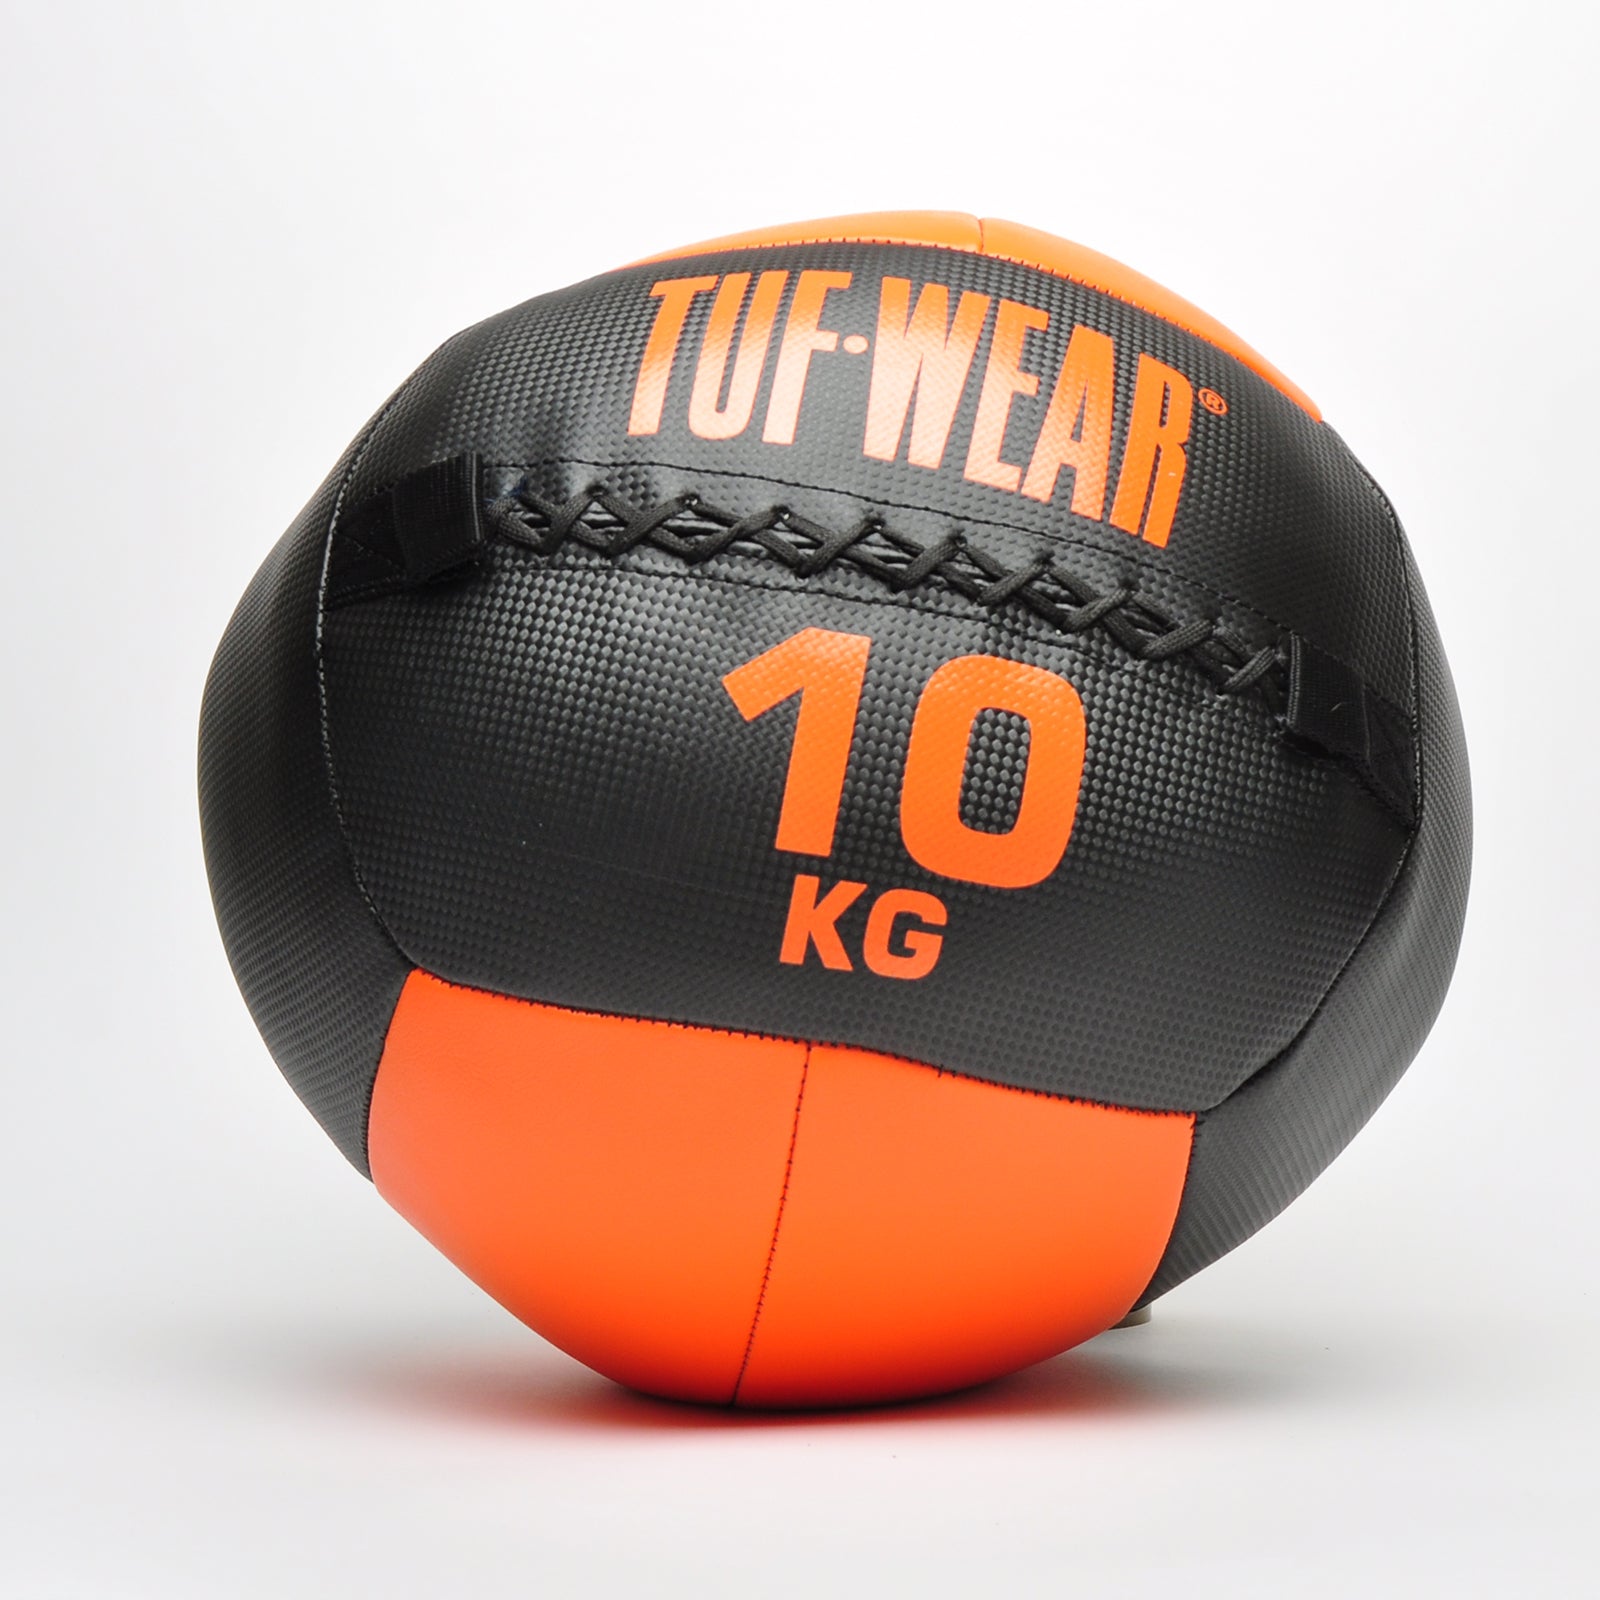 Buy TUF-WEAR 10KG Wall Ball Black/Orange